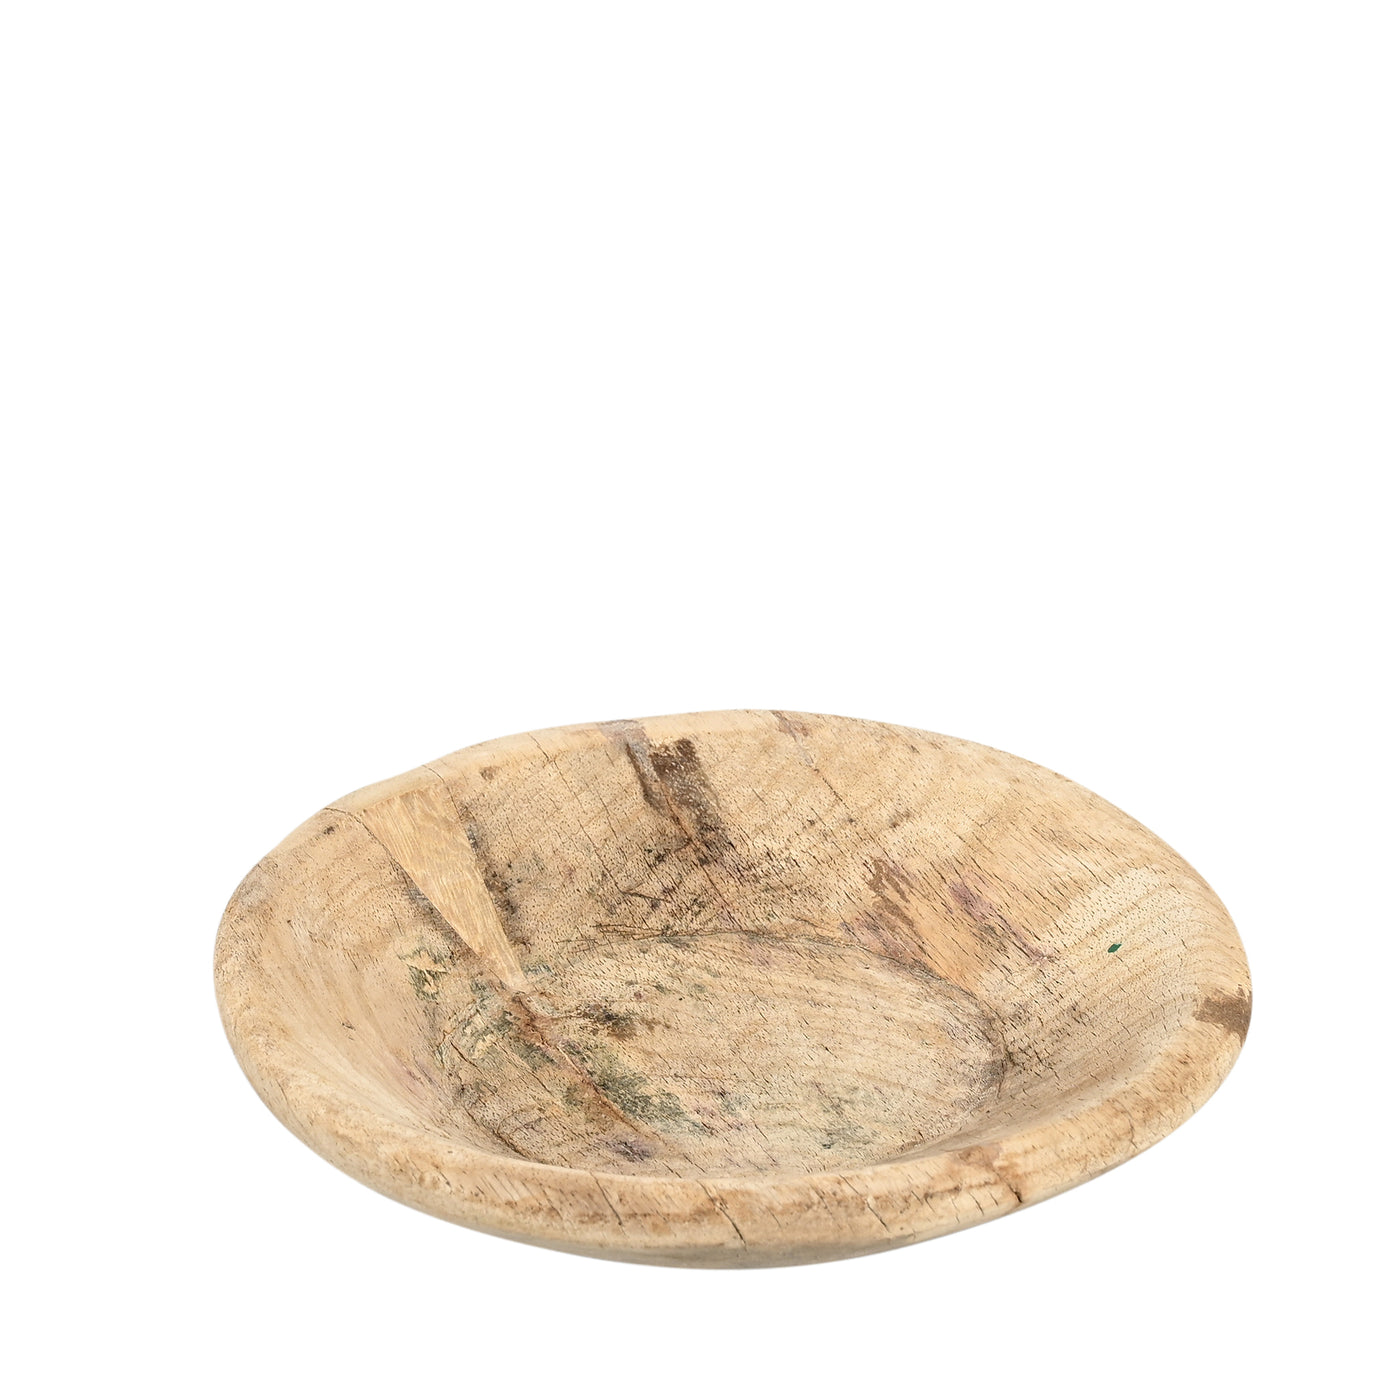 Katora - Wooden plate n ° 19